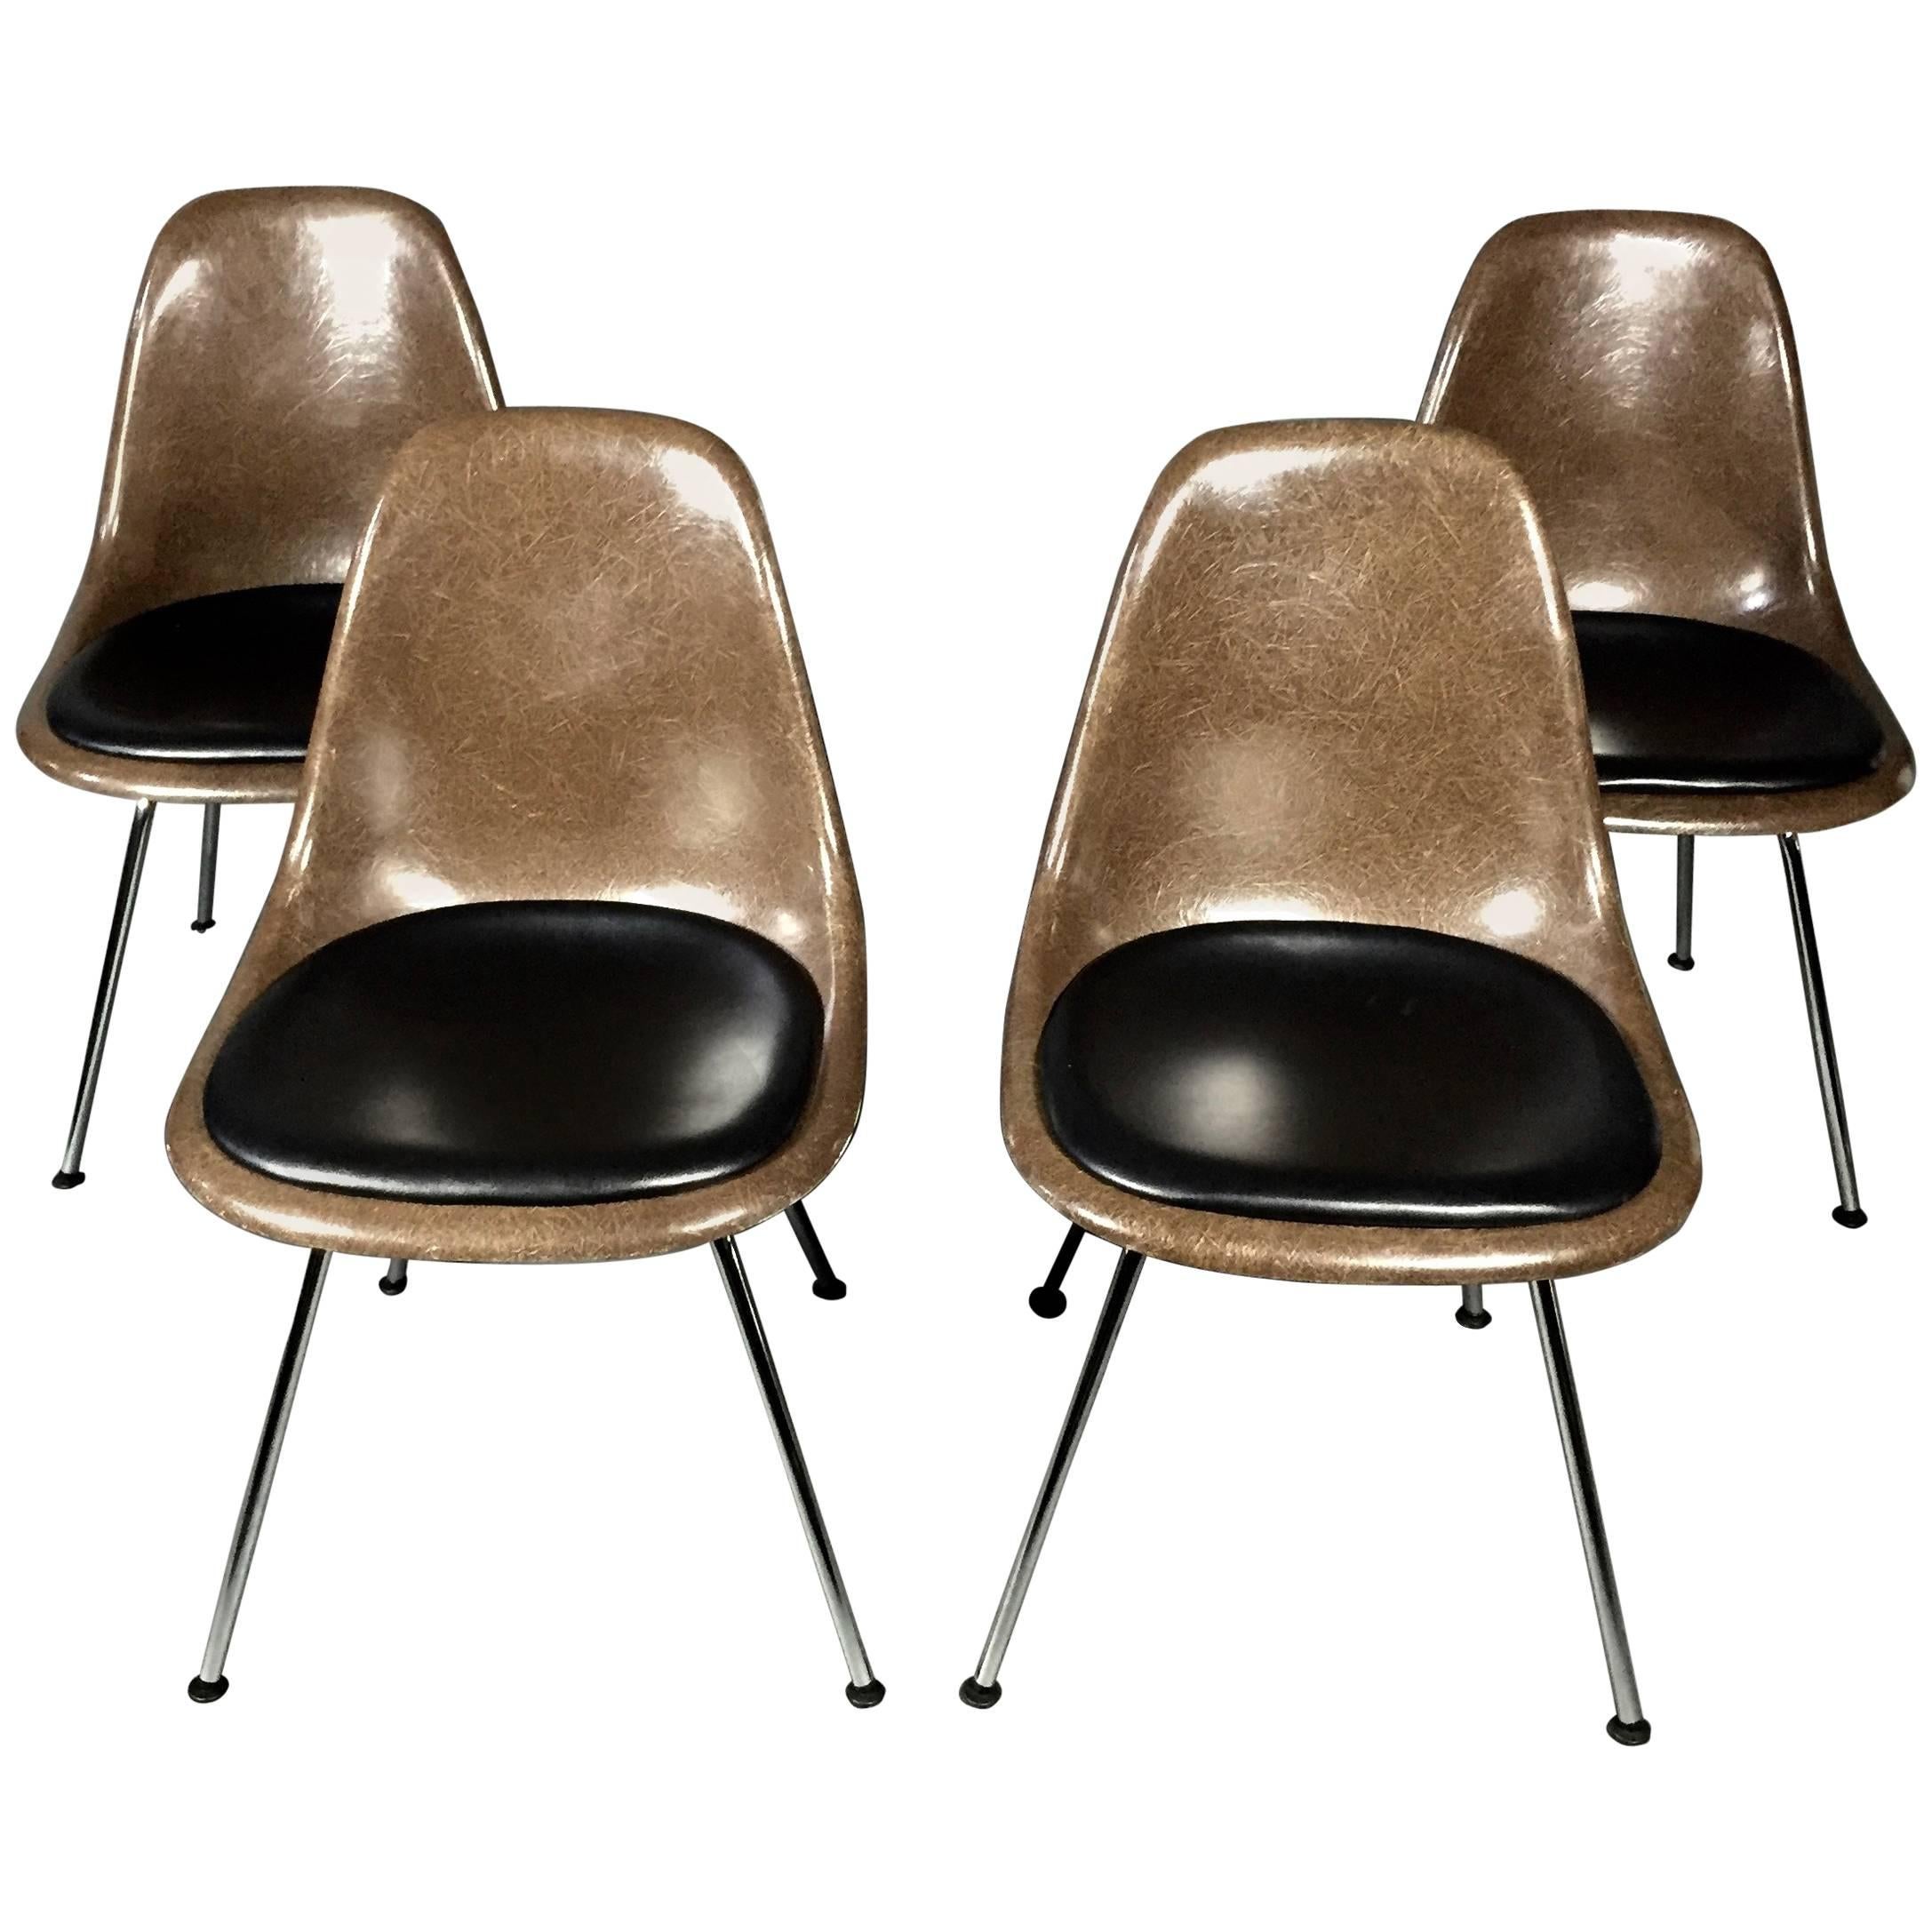 Charles and Ray Eames Fiberglass Shell Chairs, Vitra Base, Skai Seating